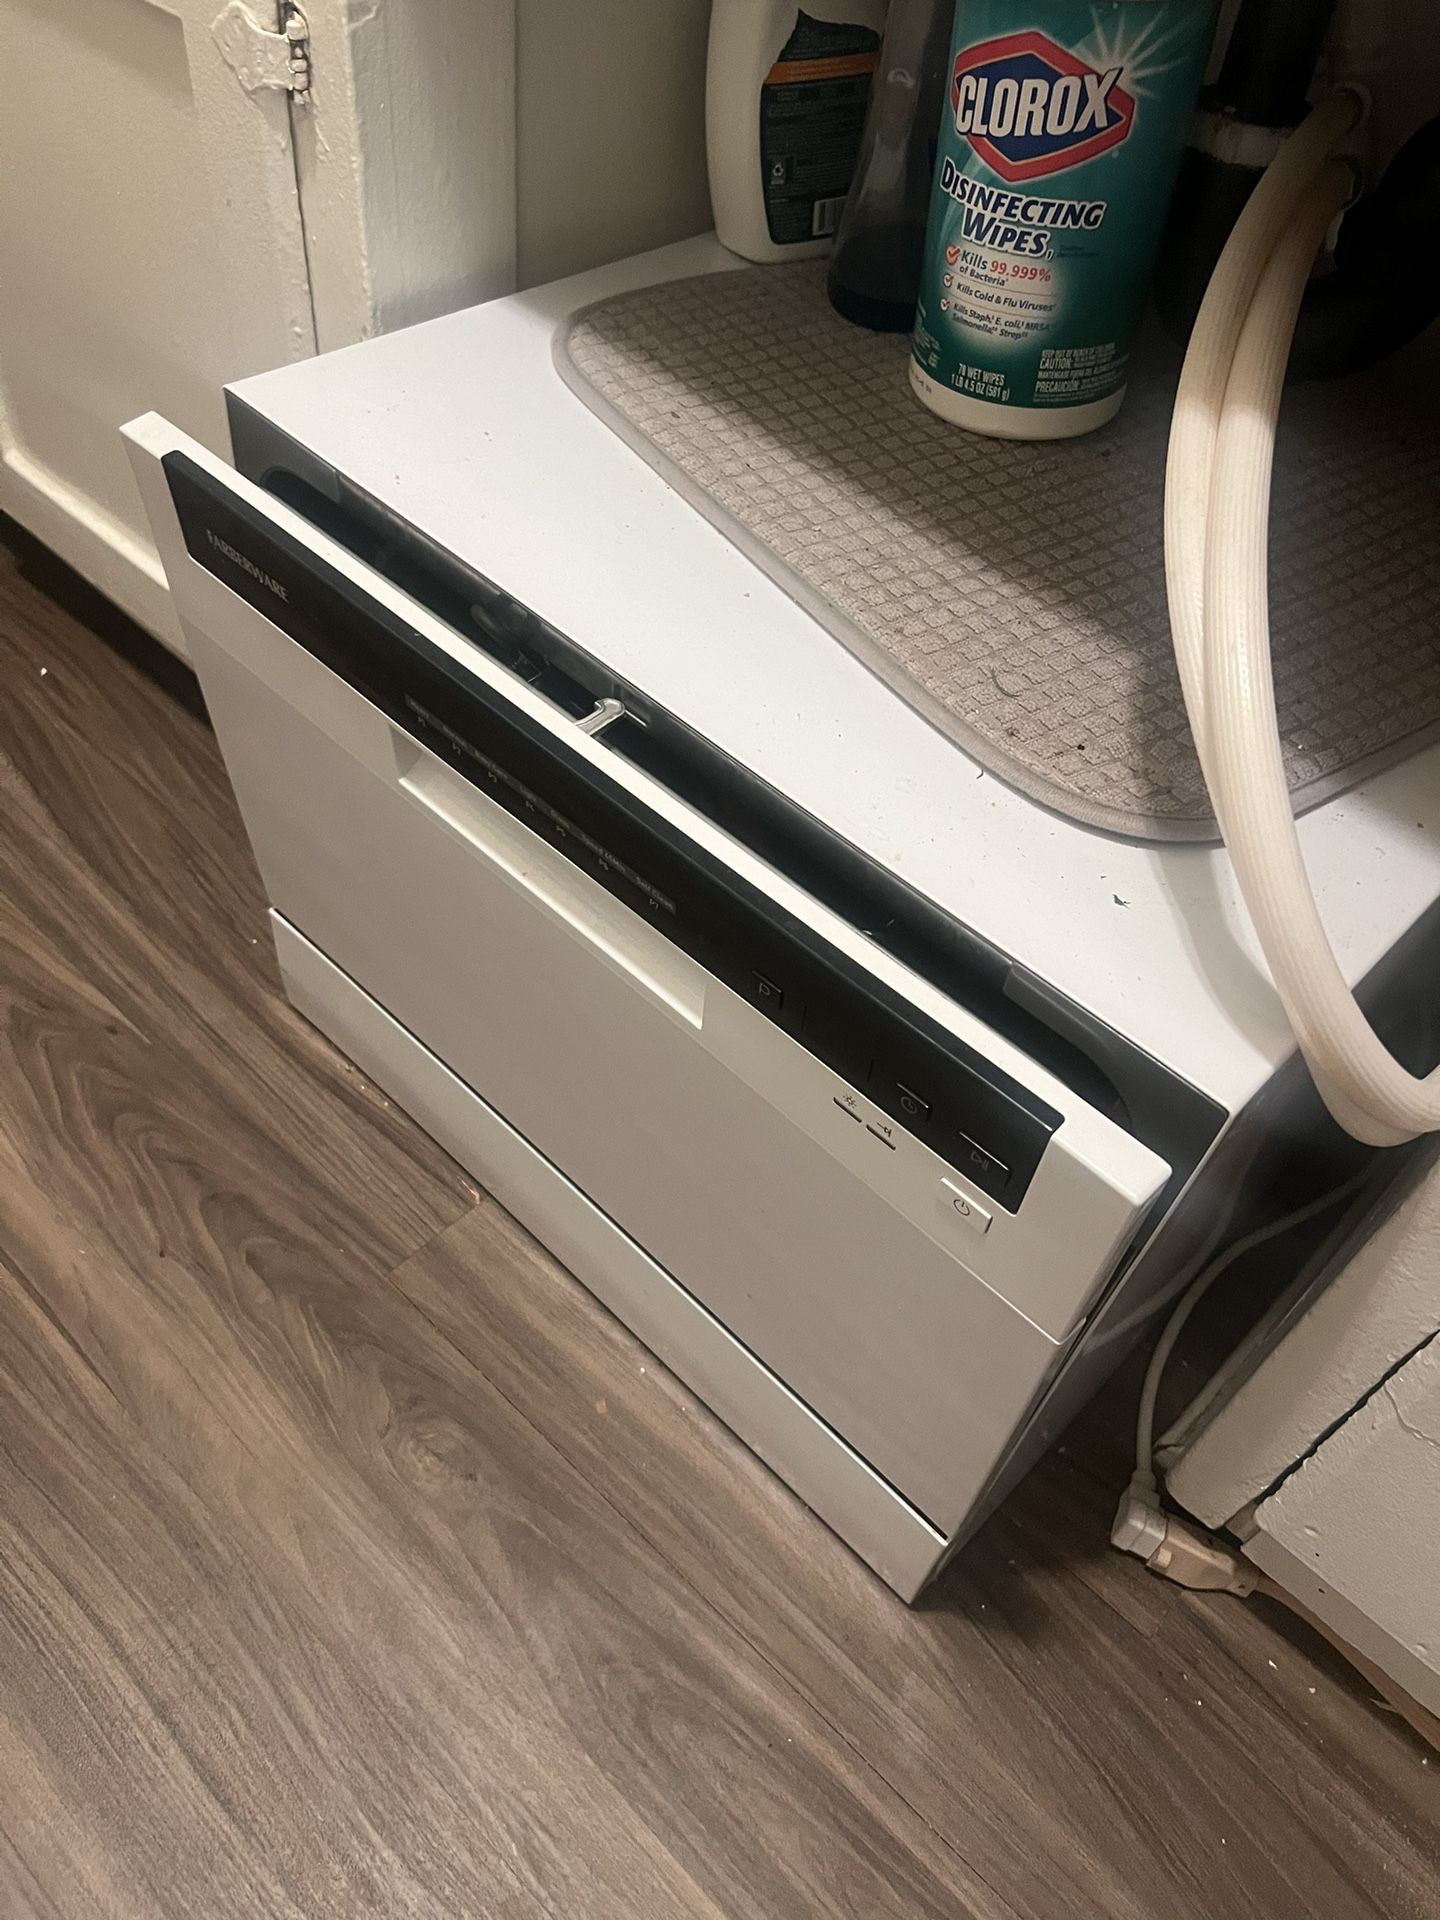 Portable Dishwasher 